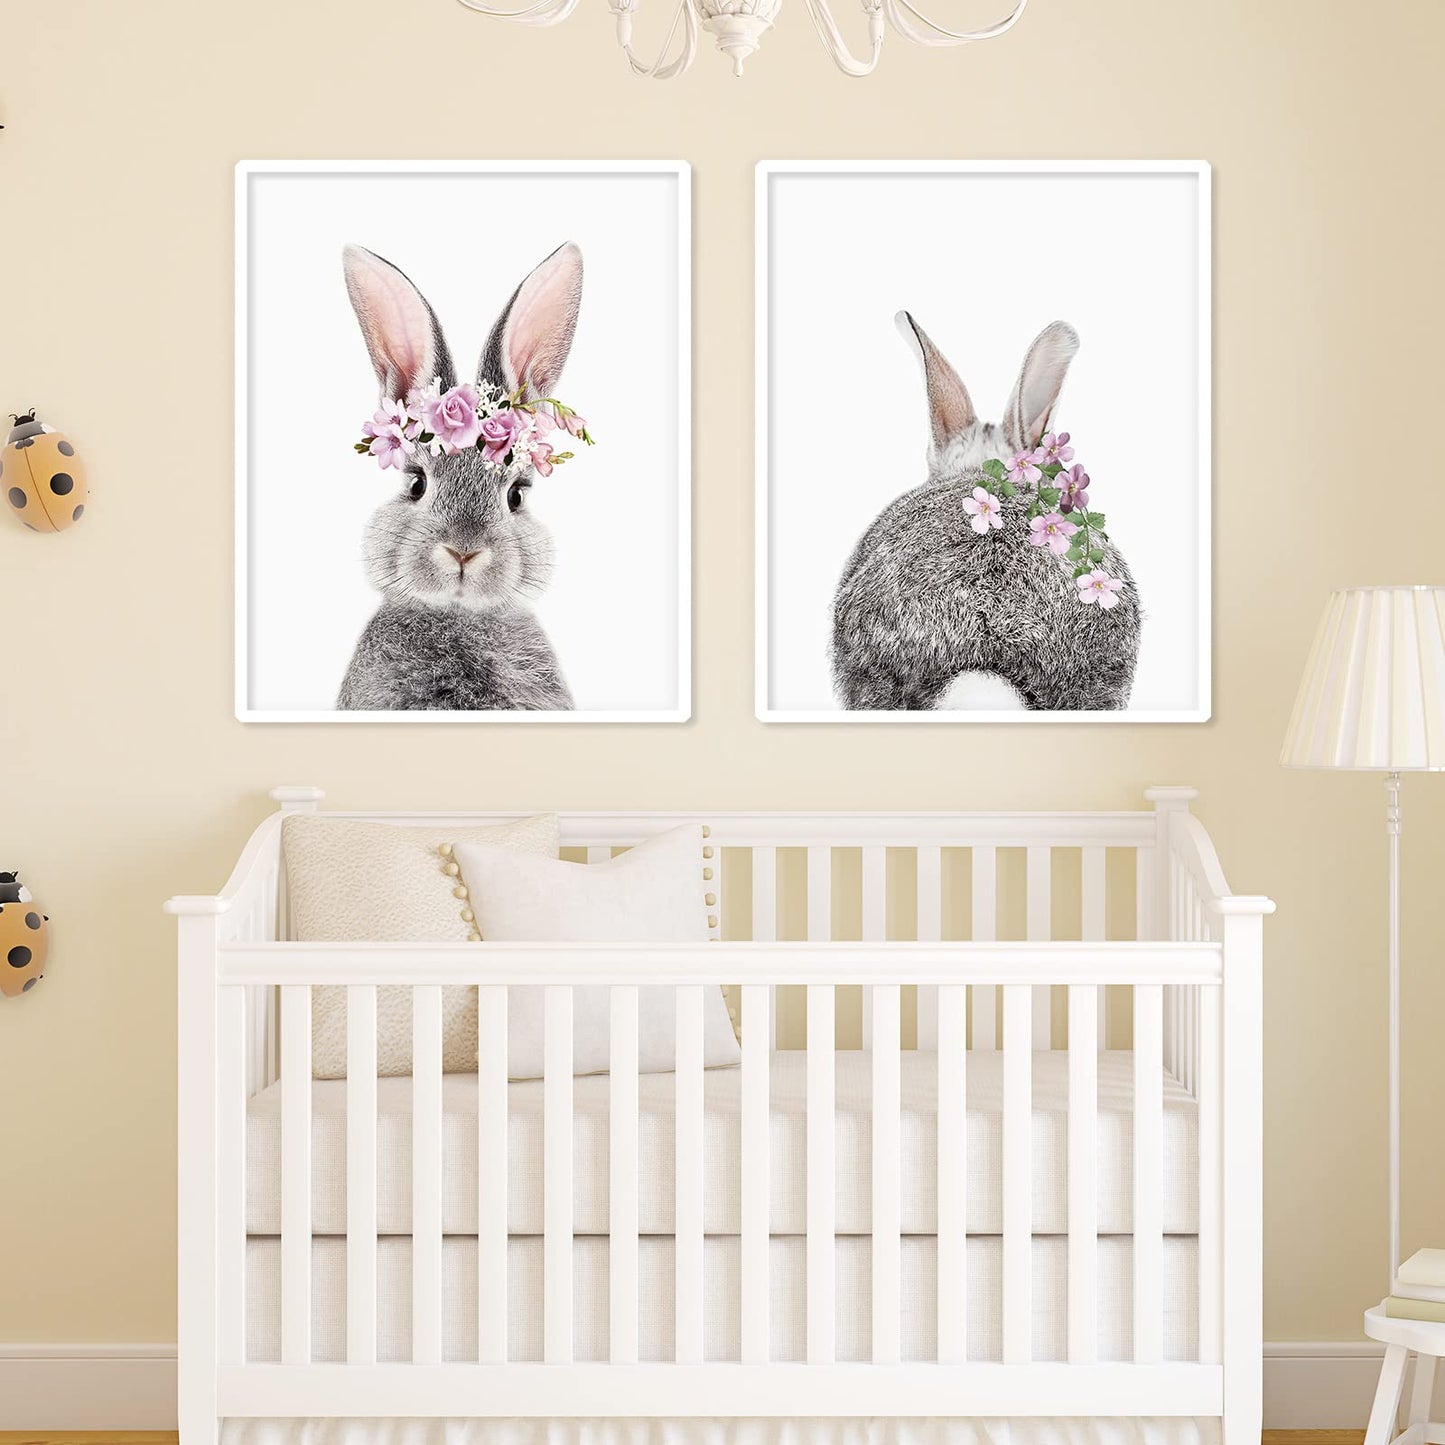 AnyDesign 2Pcs Easter Bunny Wall Art Prints Baby Bunny Rabbit Art Poster Baby Animals Nursery Flower Prints Room Decor Aesthetic for Nursery Wall Kids Bedroom Home Decor (8"x10" UNFRAMED)